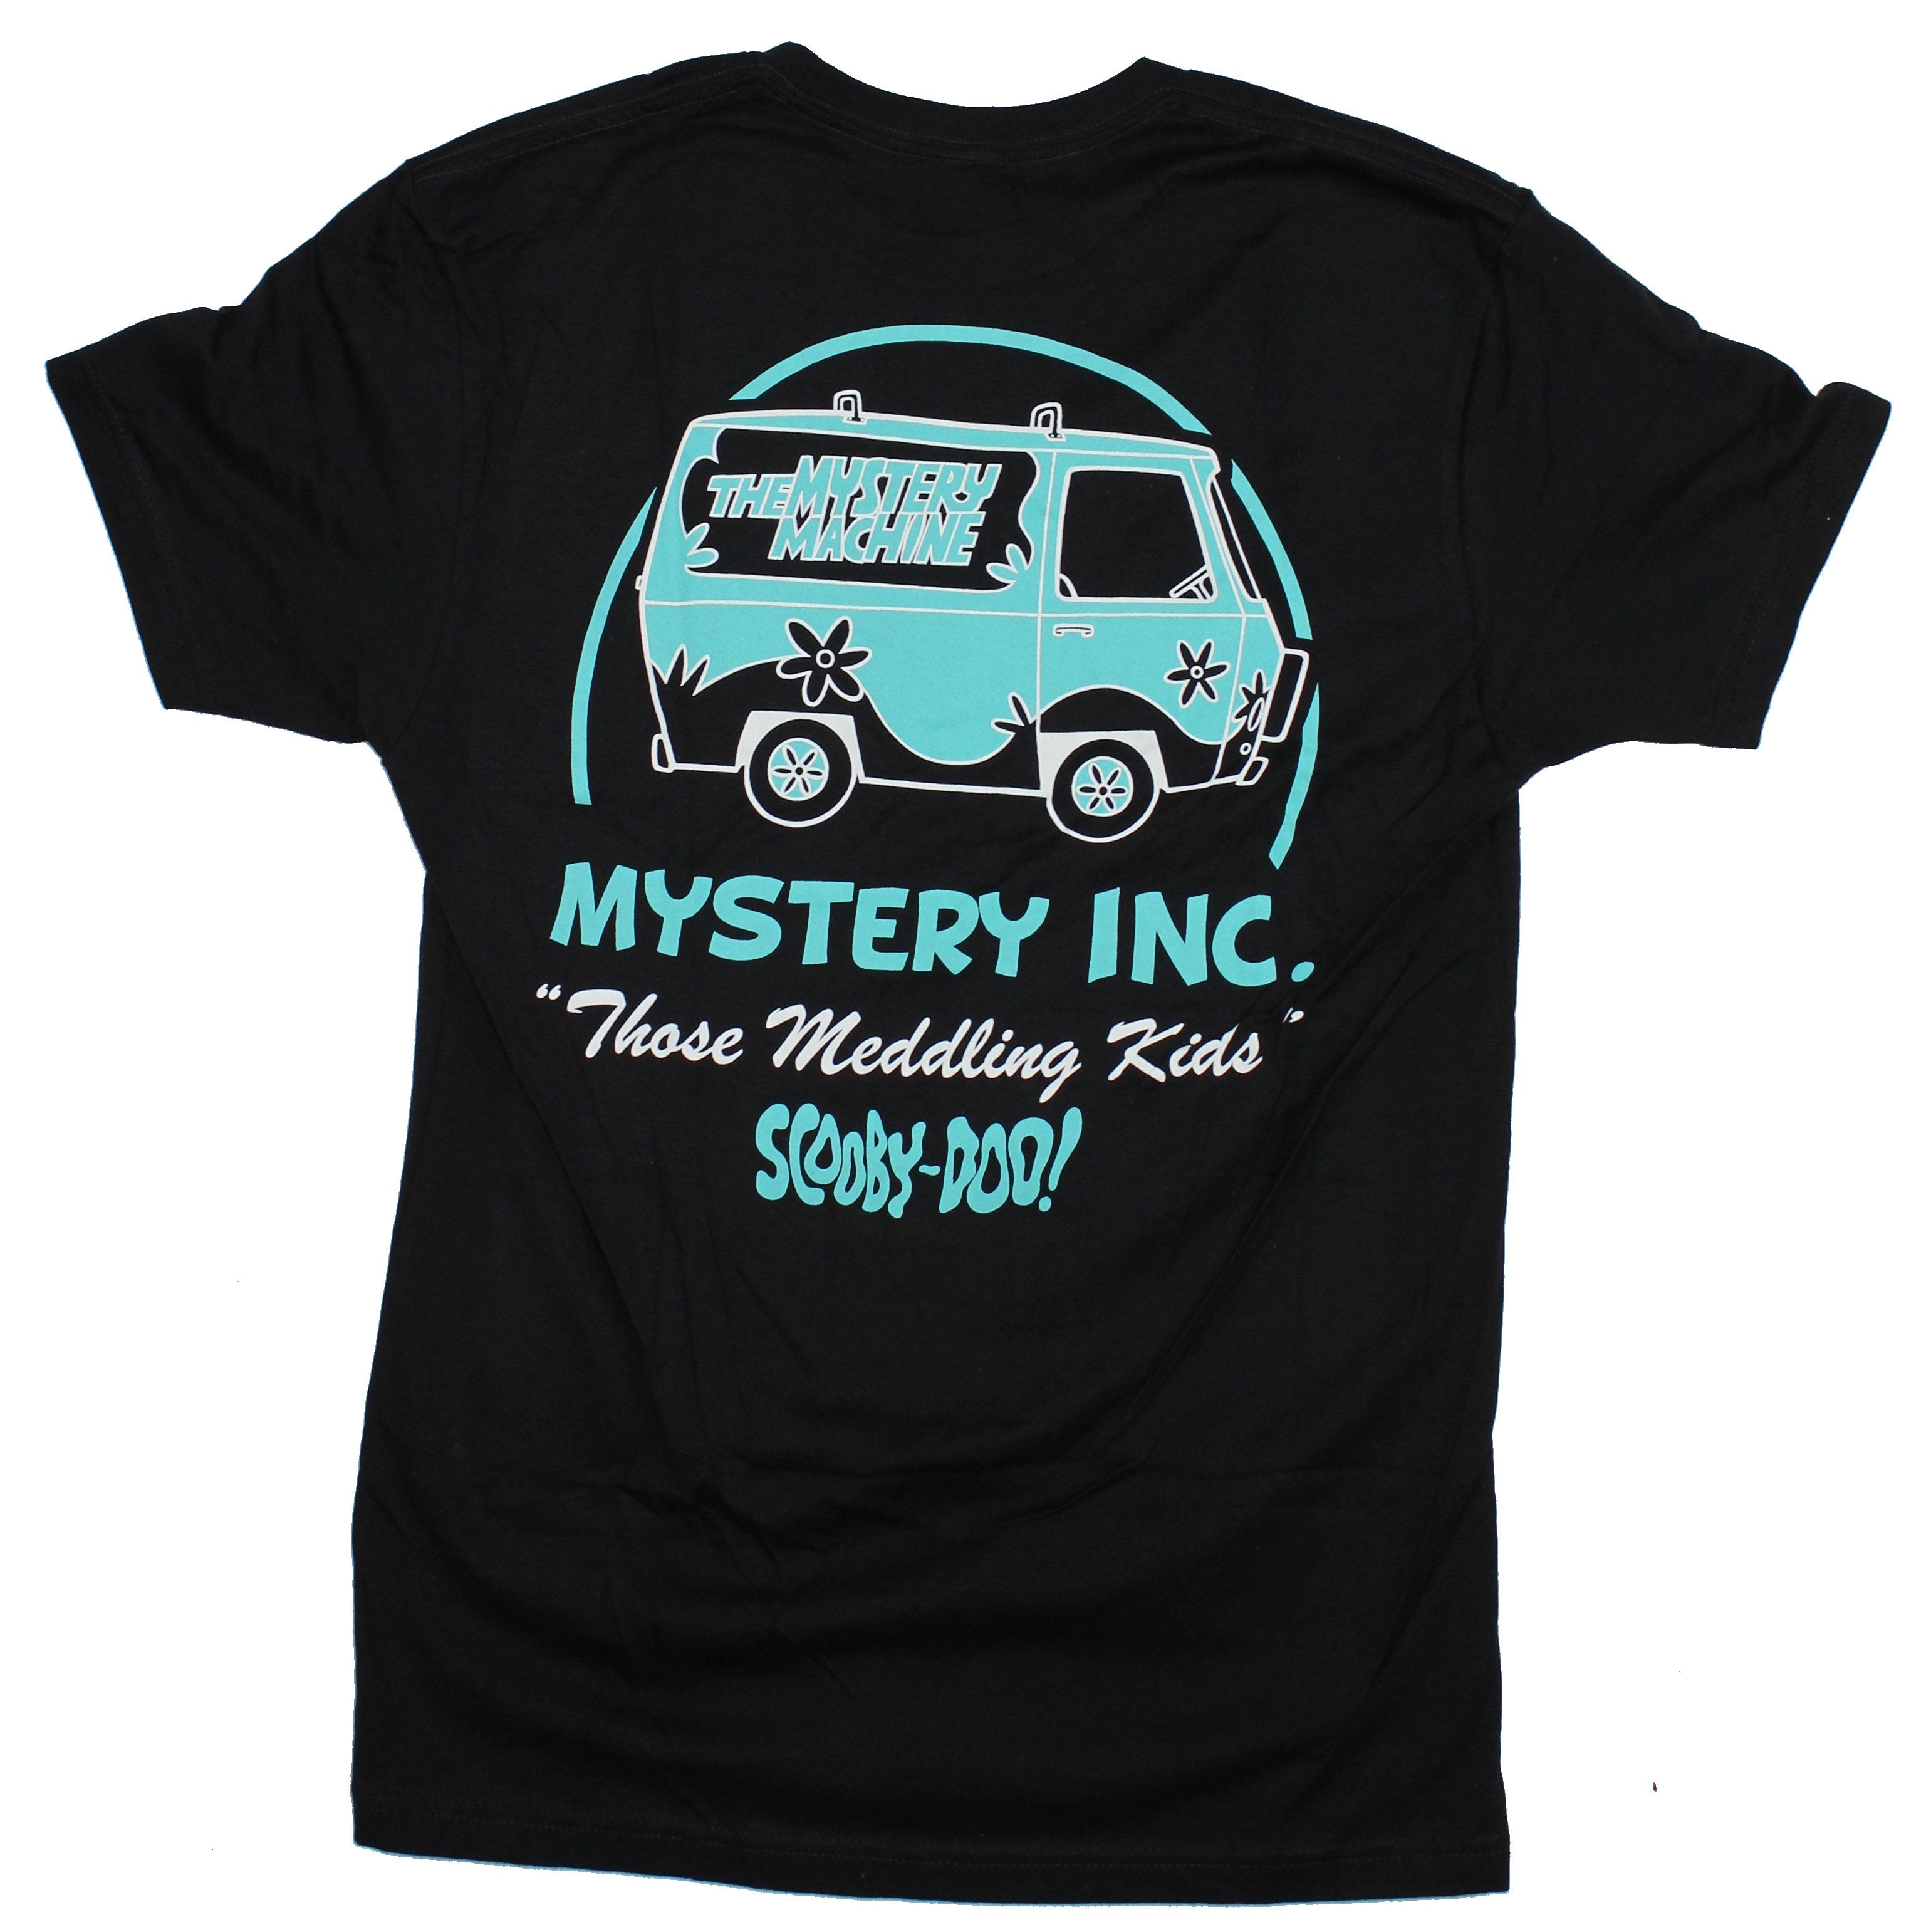 Scooby Doo Mens T-Shirt - Mystery Inc Those Meddling Kids Back Machine Logo